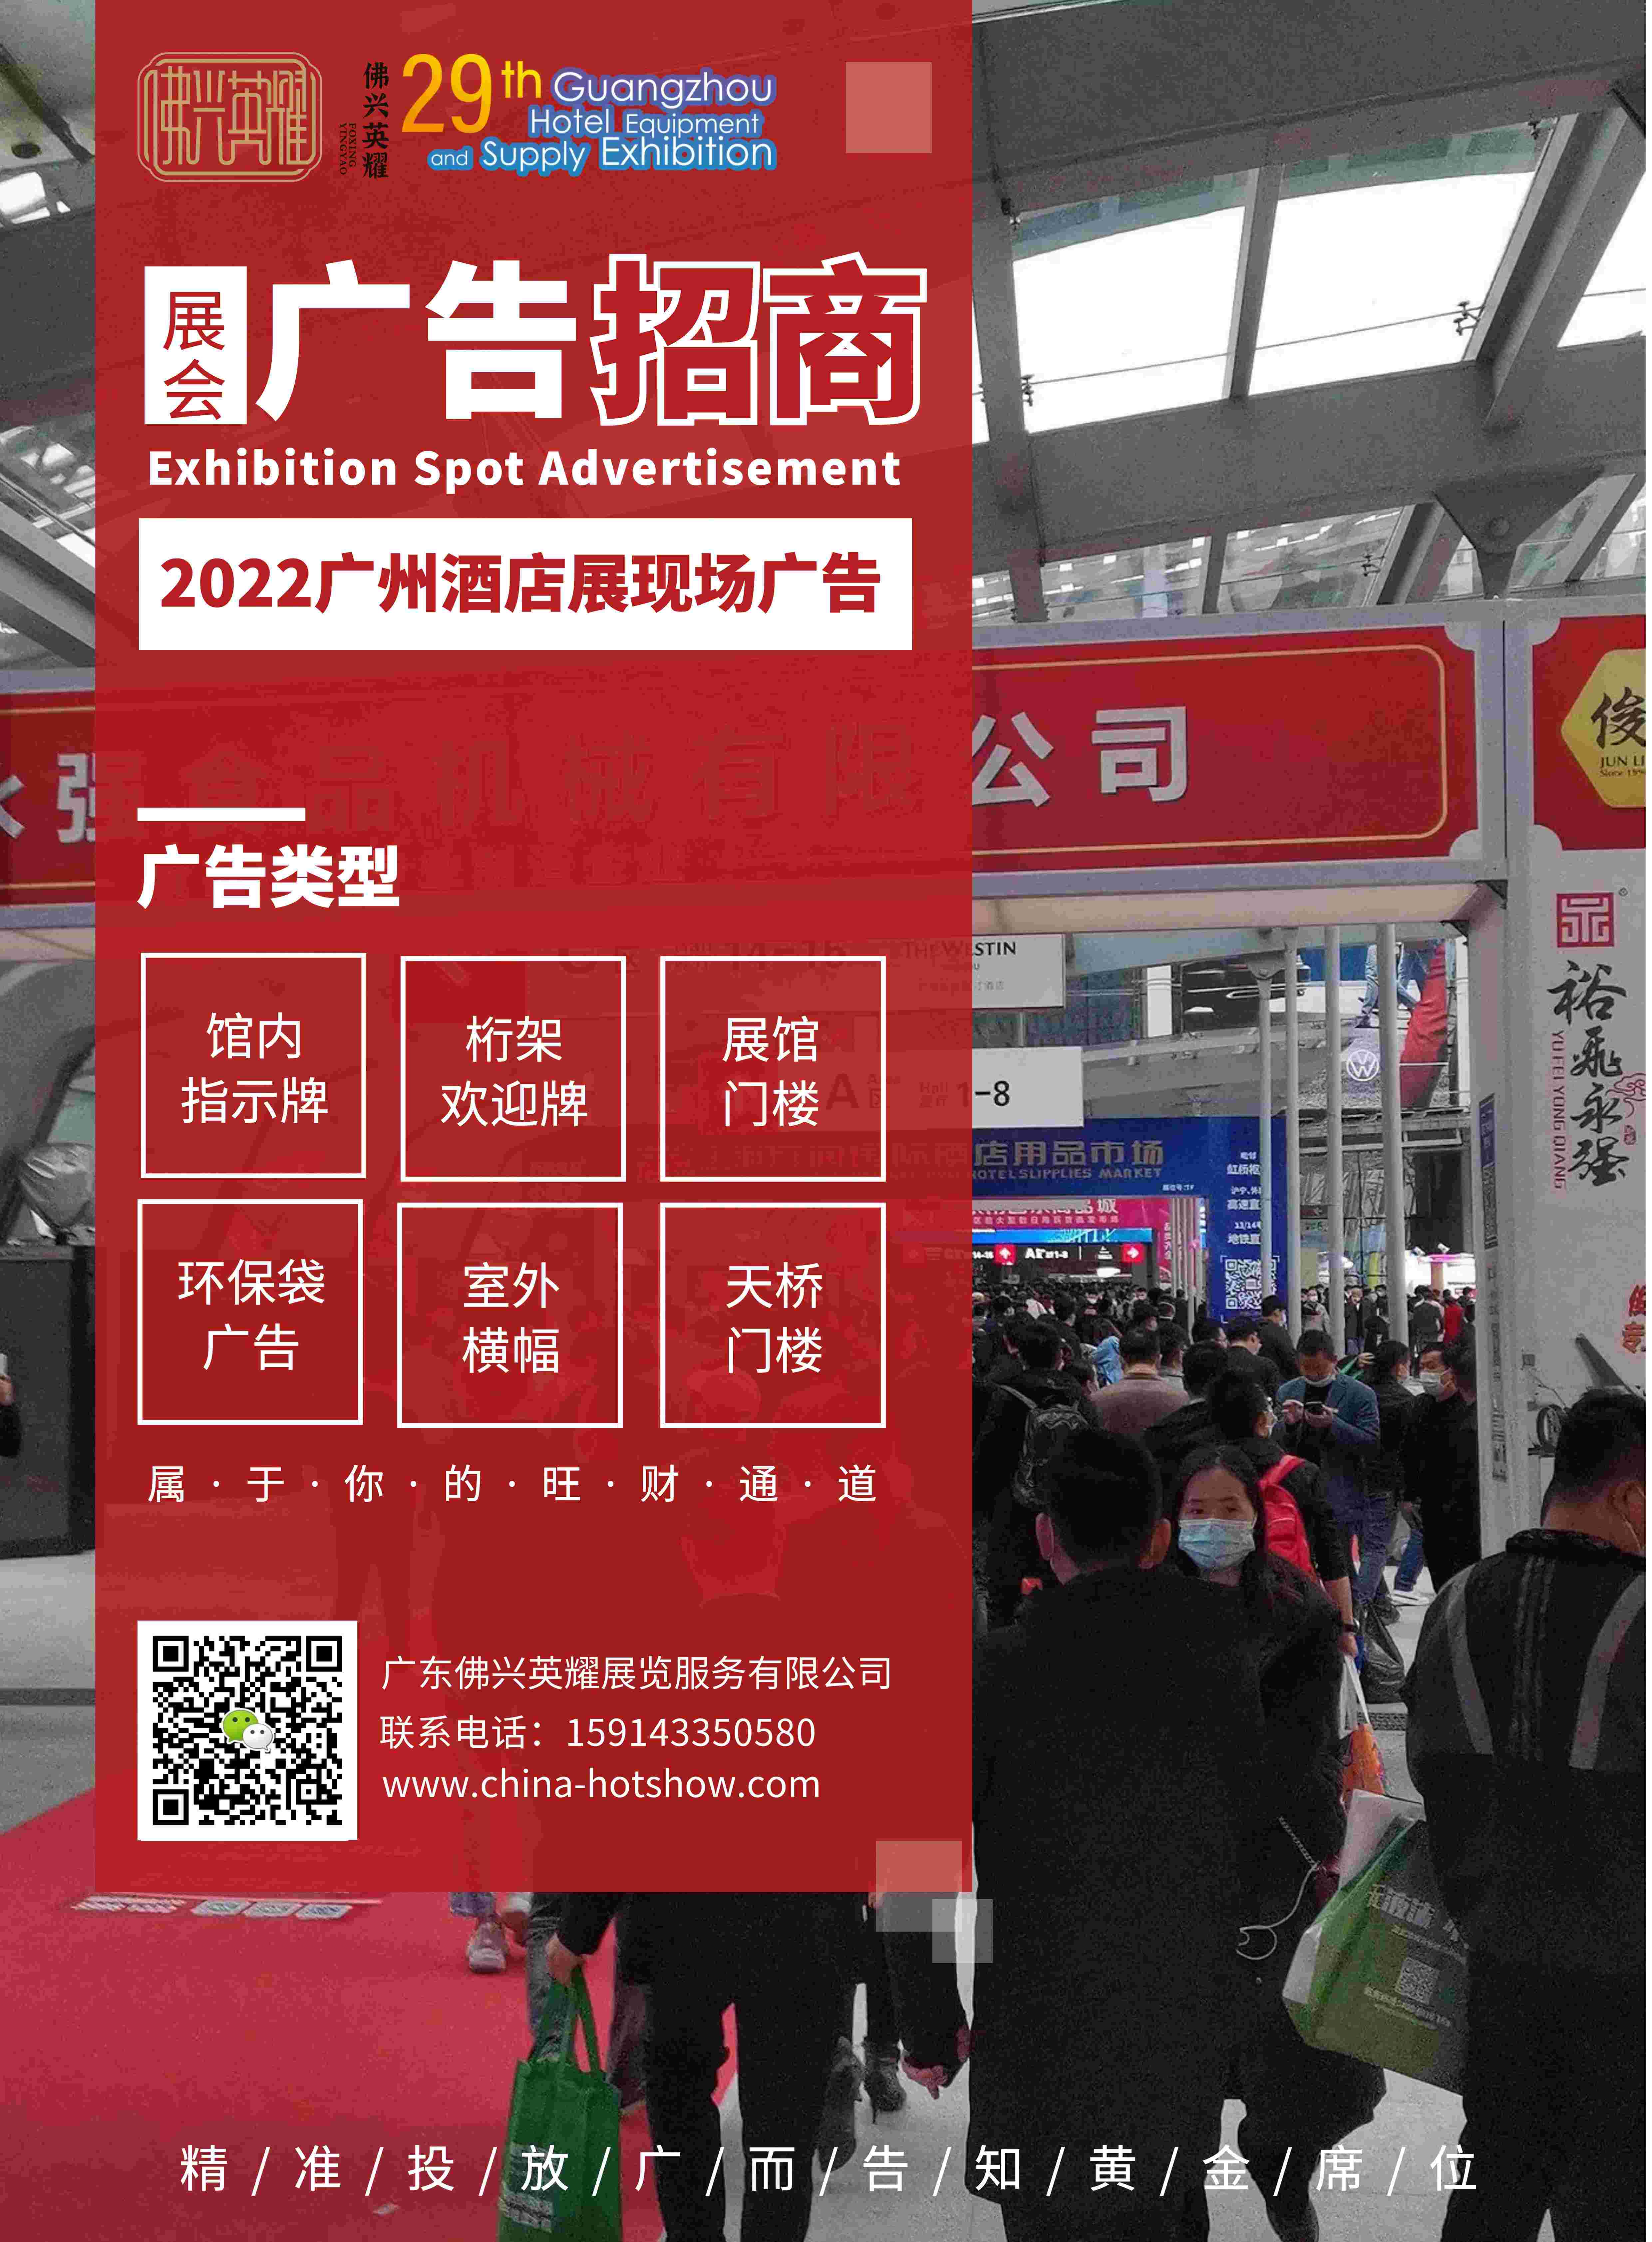 2022 Guangzhou Hote Exhibition Spot Advertisement